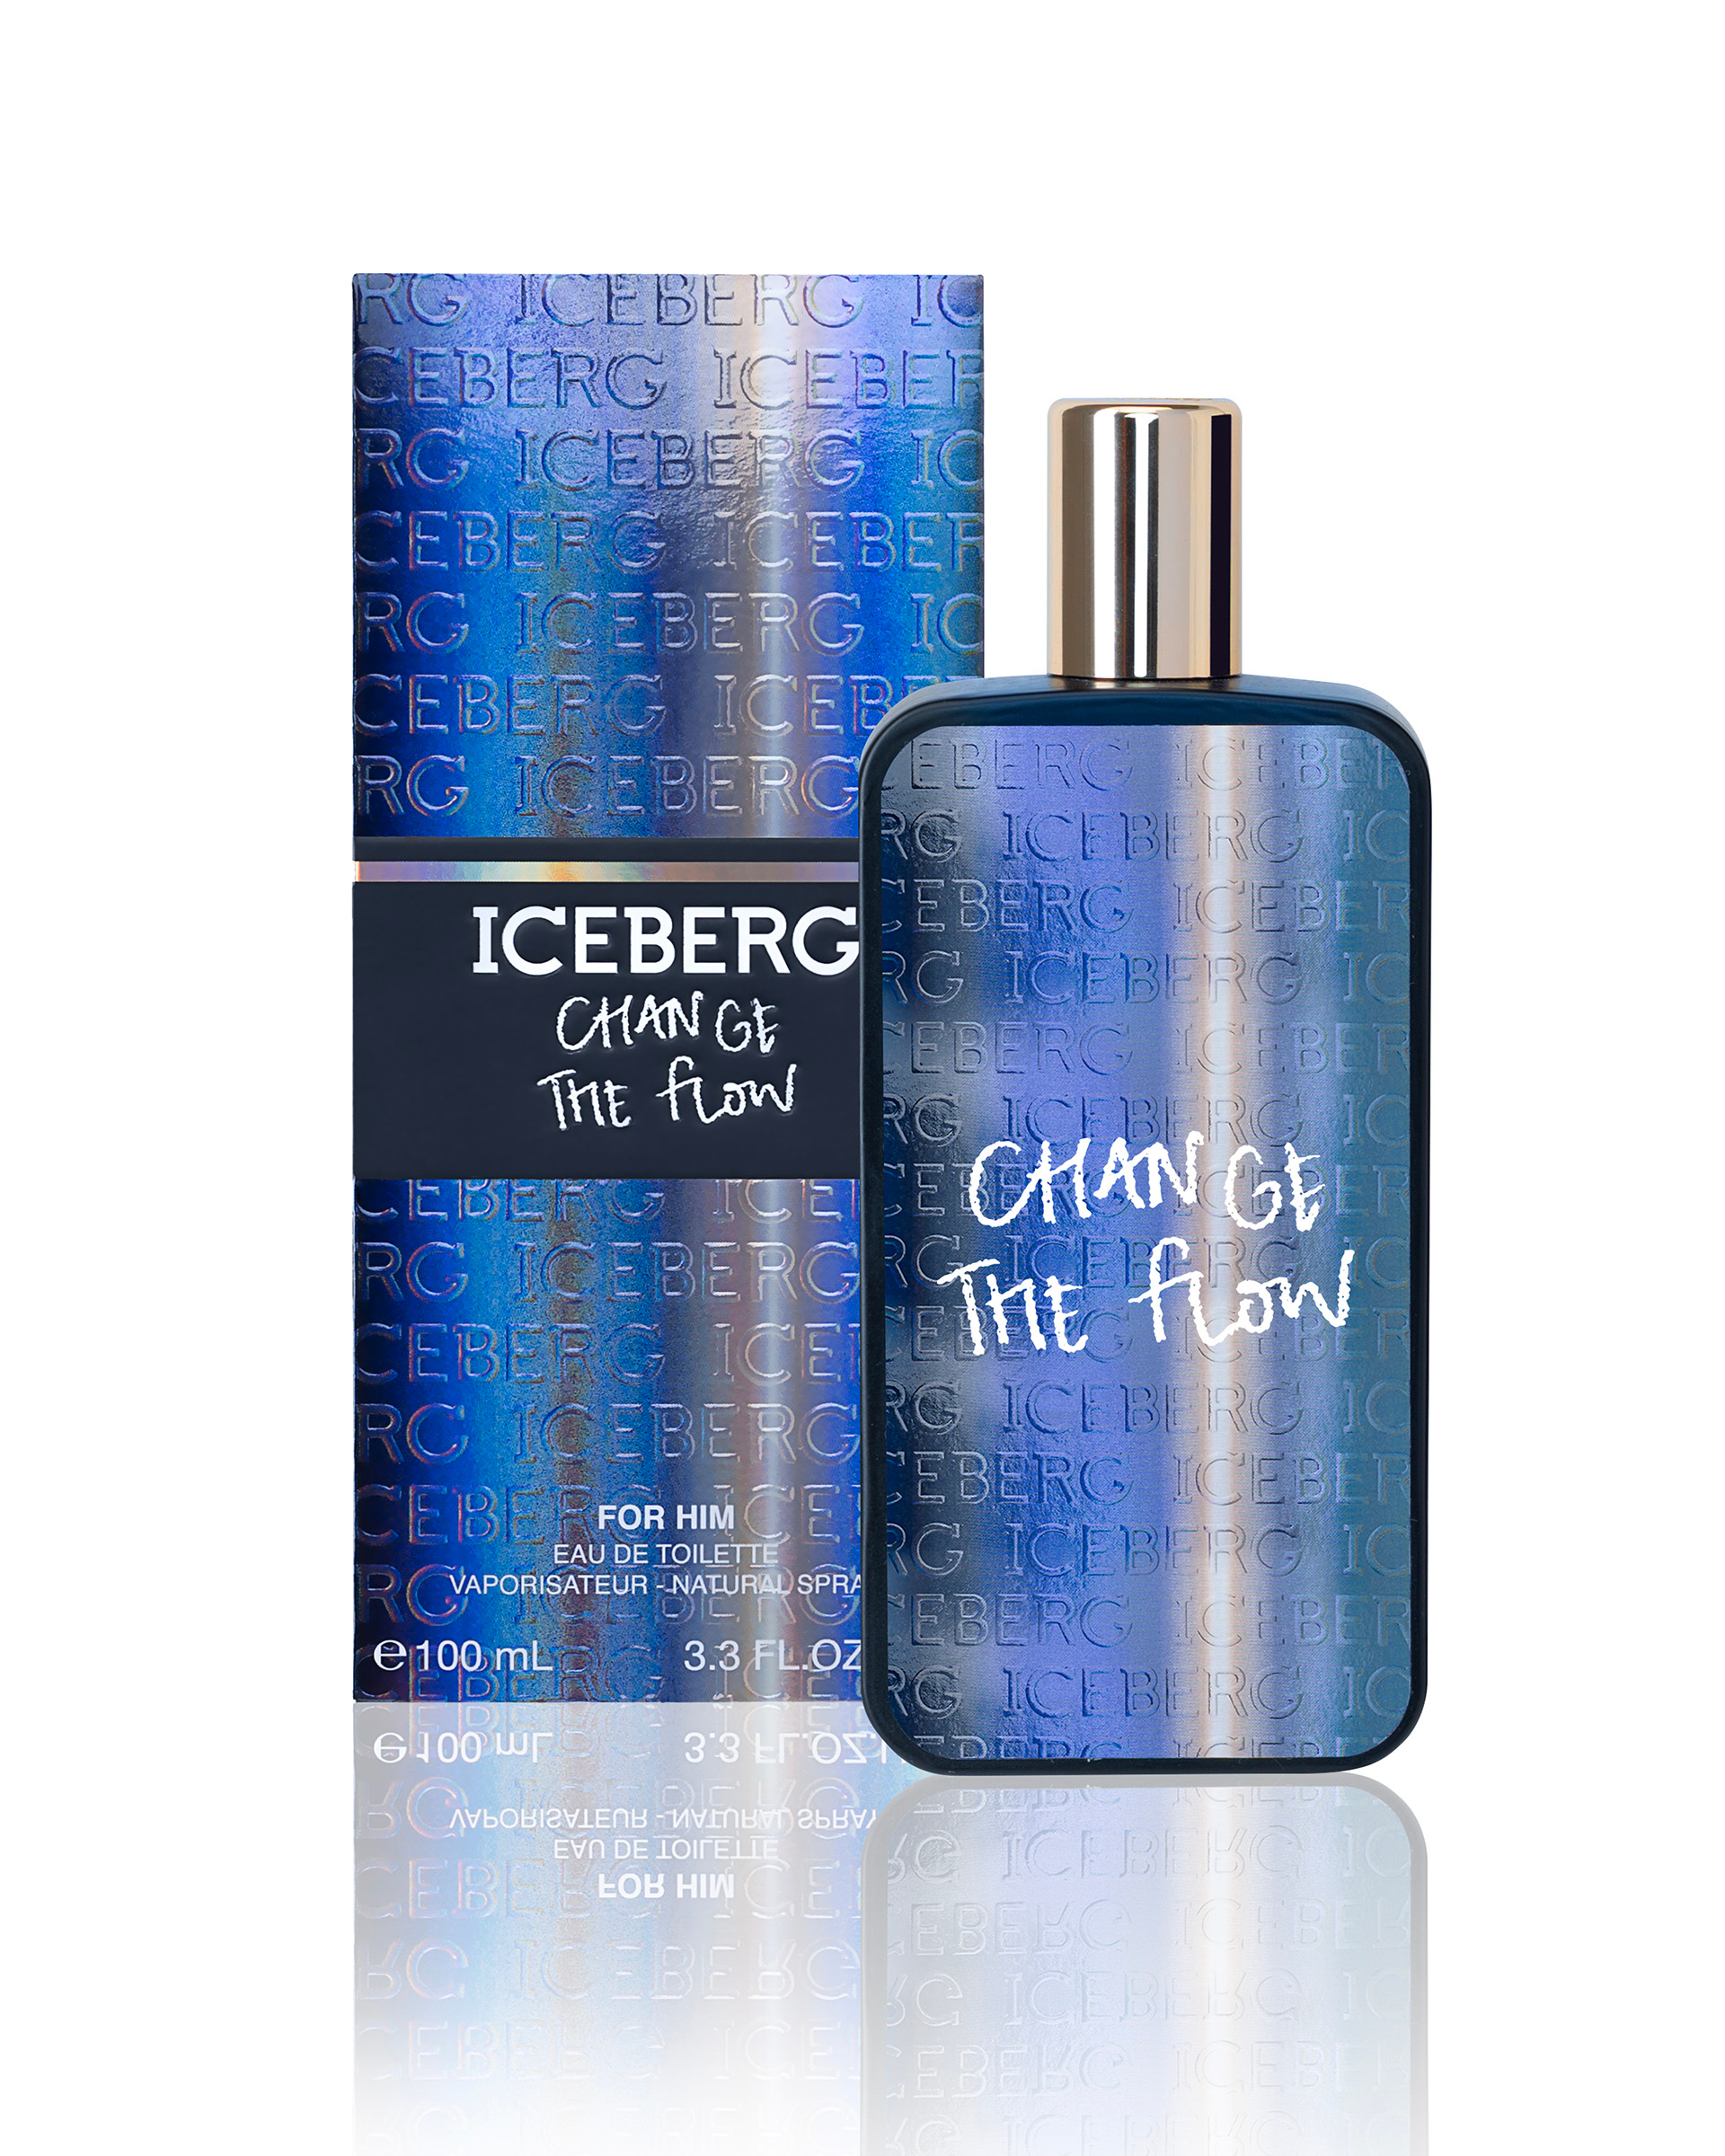 CHANGE THE Iceberg FLOW | The fragrance